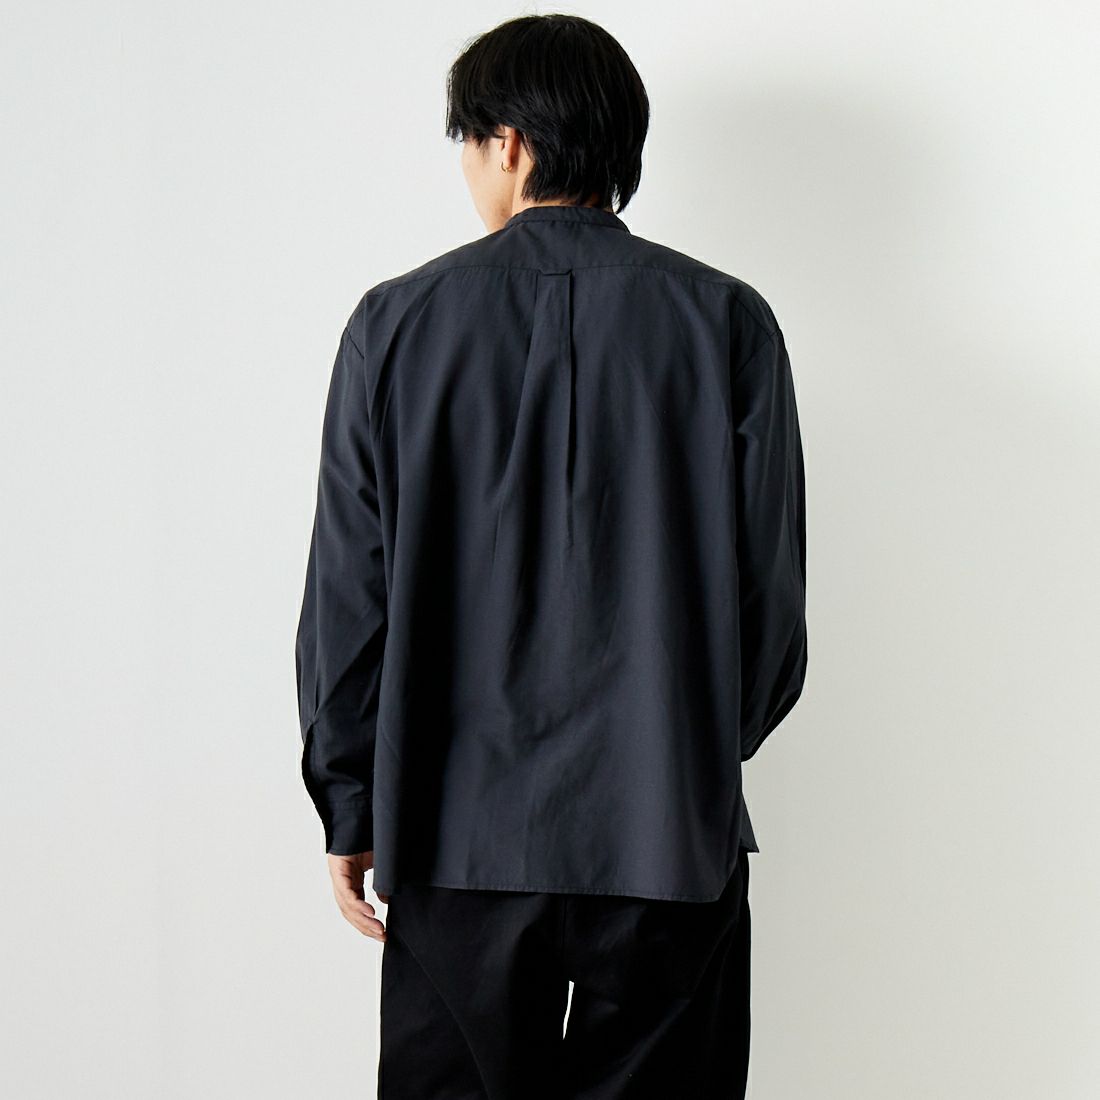 Jeans Factory Clothes [ジーンズファクトリークローズ] ロングスリーブ テックリネンバンドカラーシャツ [EPC-41100] 6 CHARCOAL &&モデル身長：179cm 着用サイズ：L&&